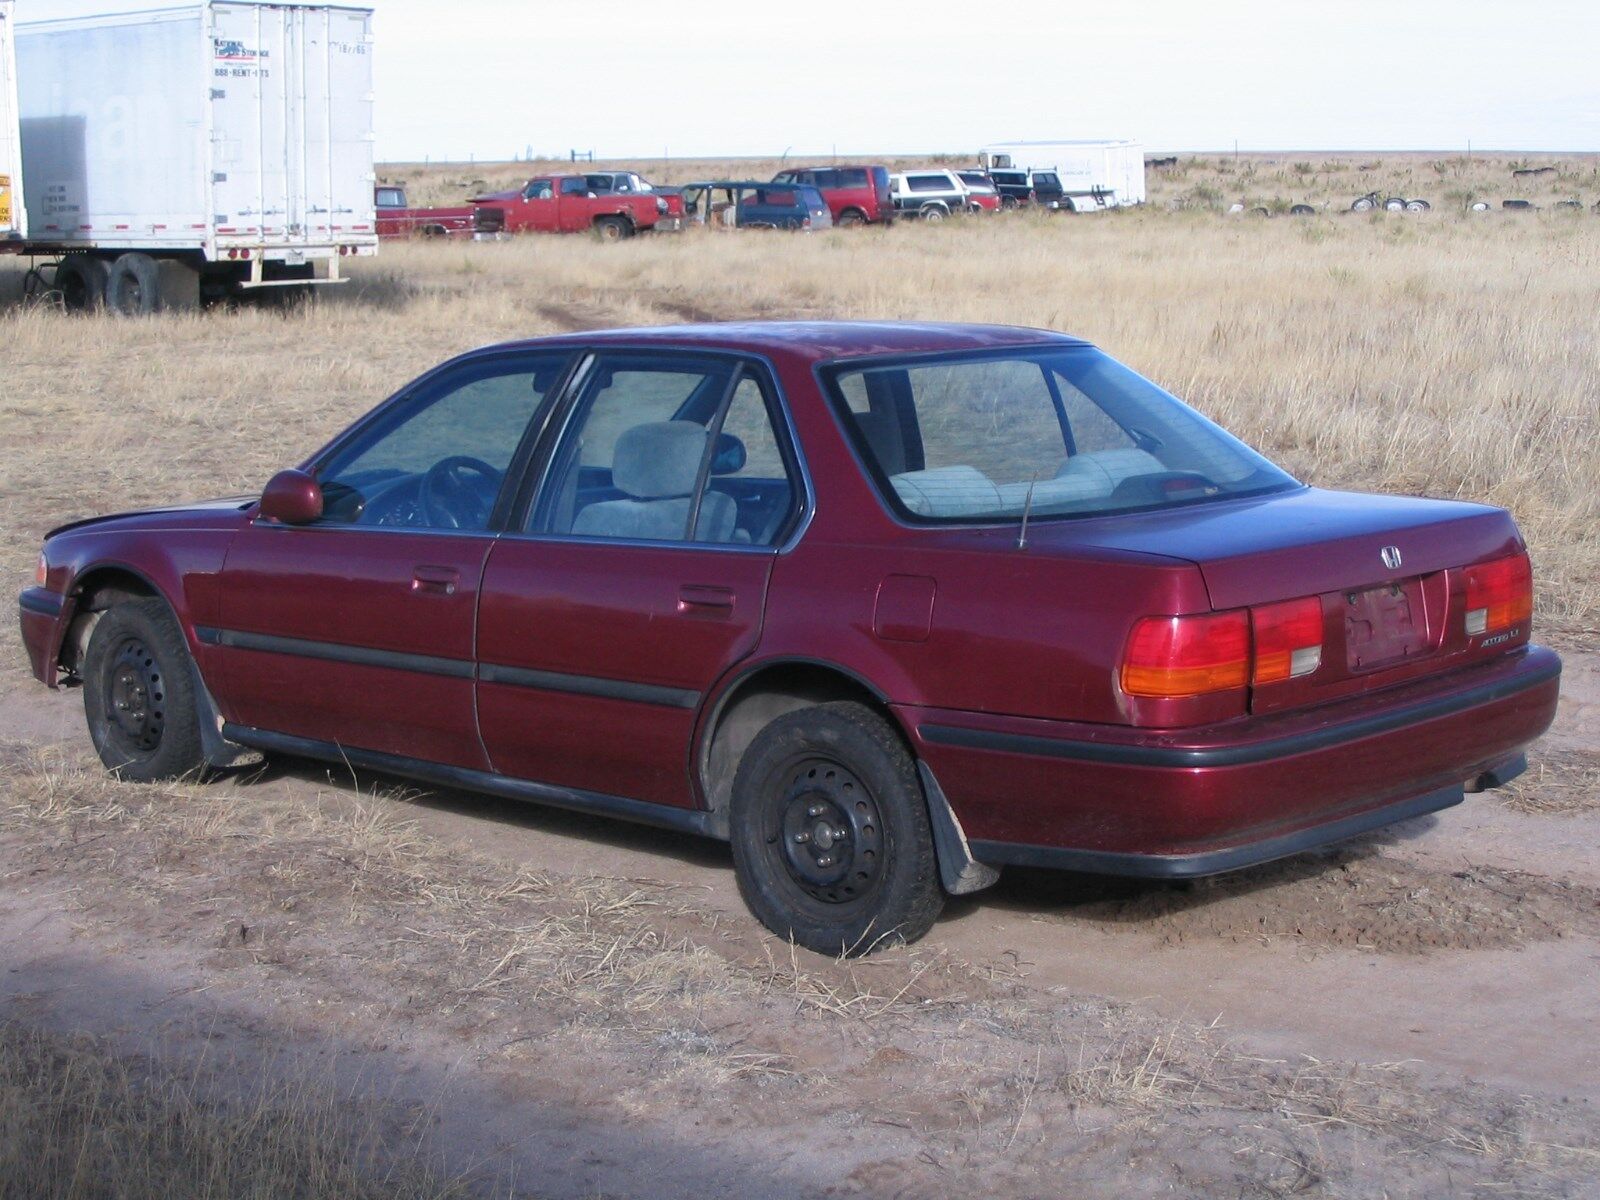 92 1992 Honda Accord 4 door, 4 cyl auto-complete parts car-GOES FOR SCRAP SOON